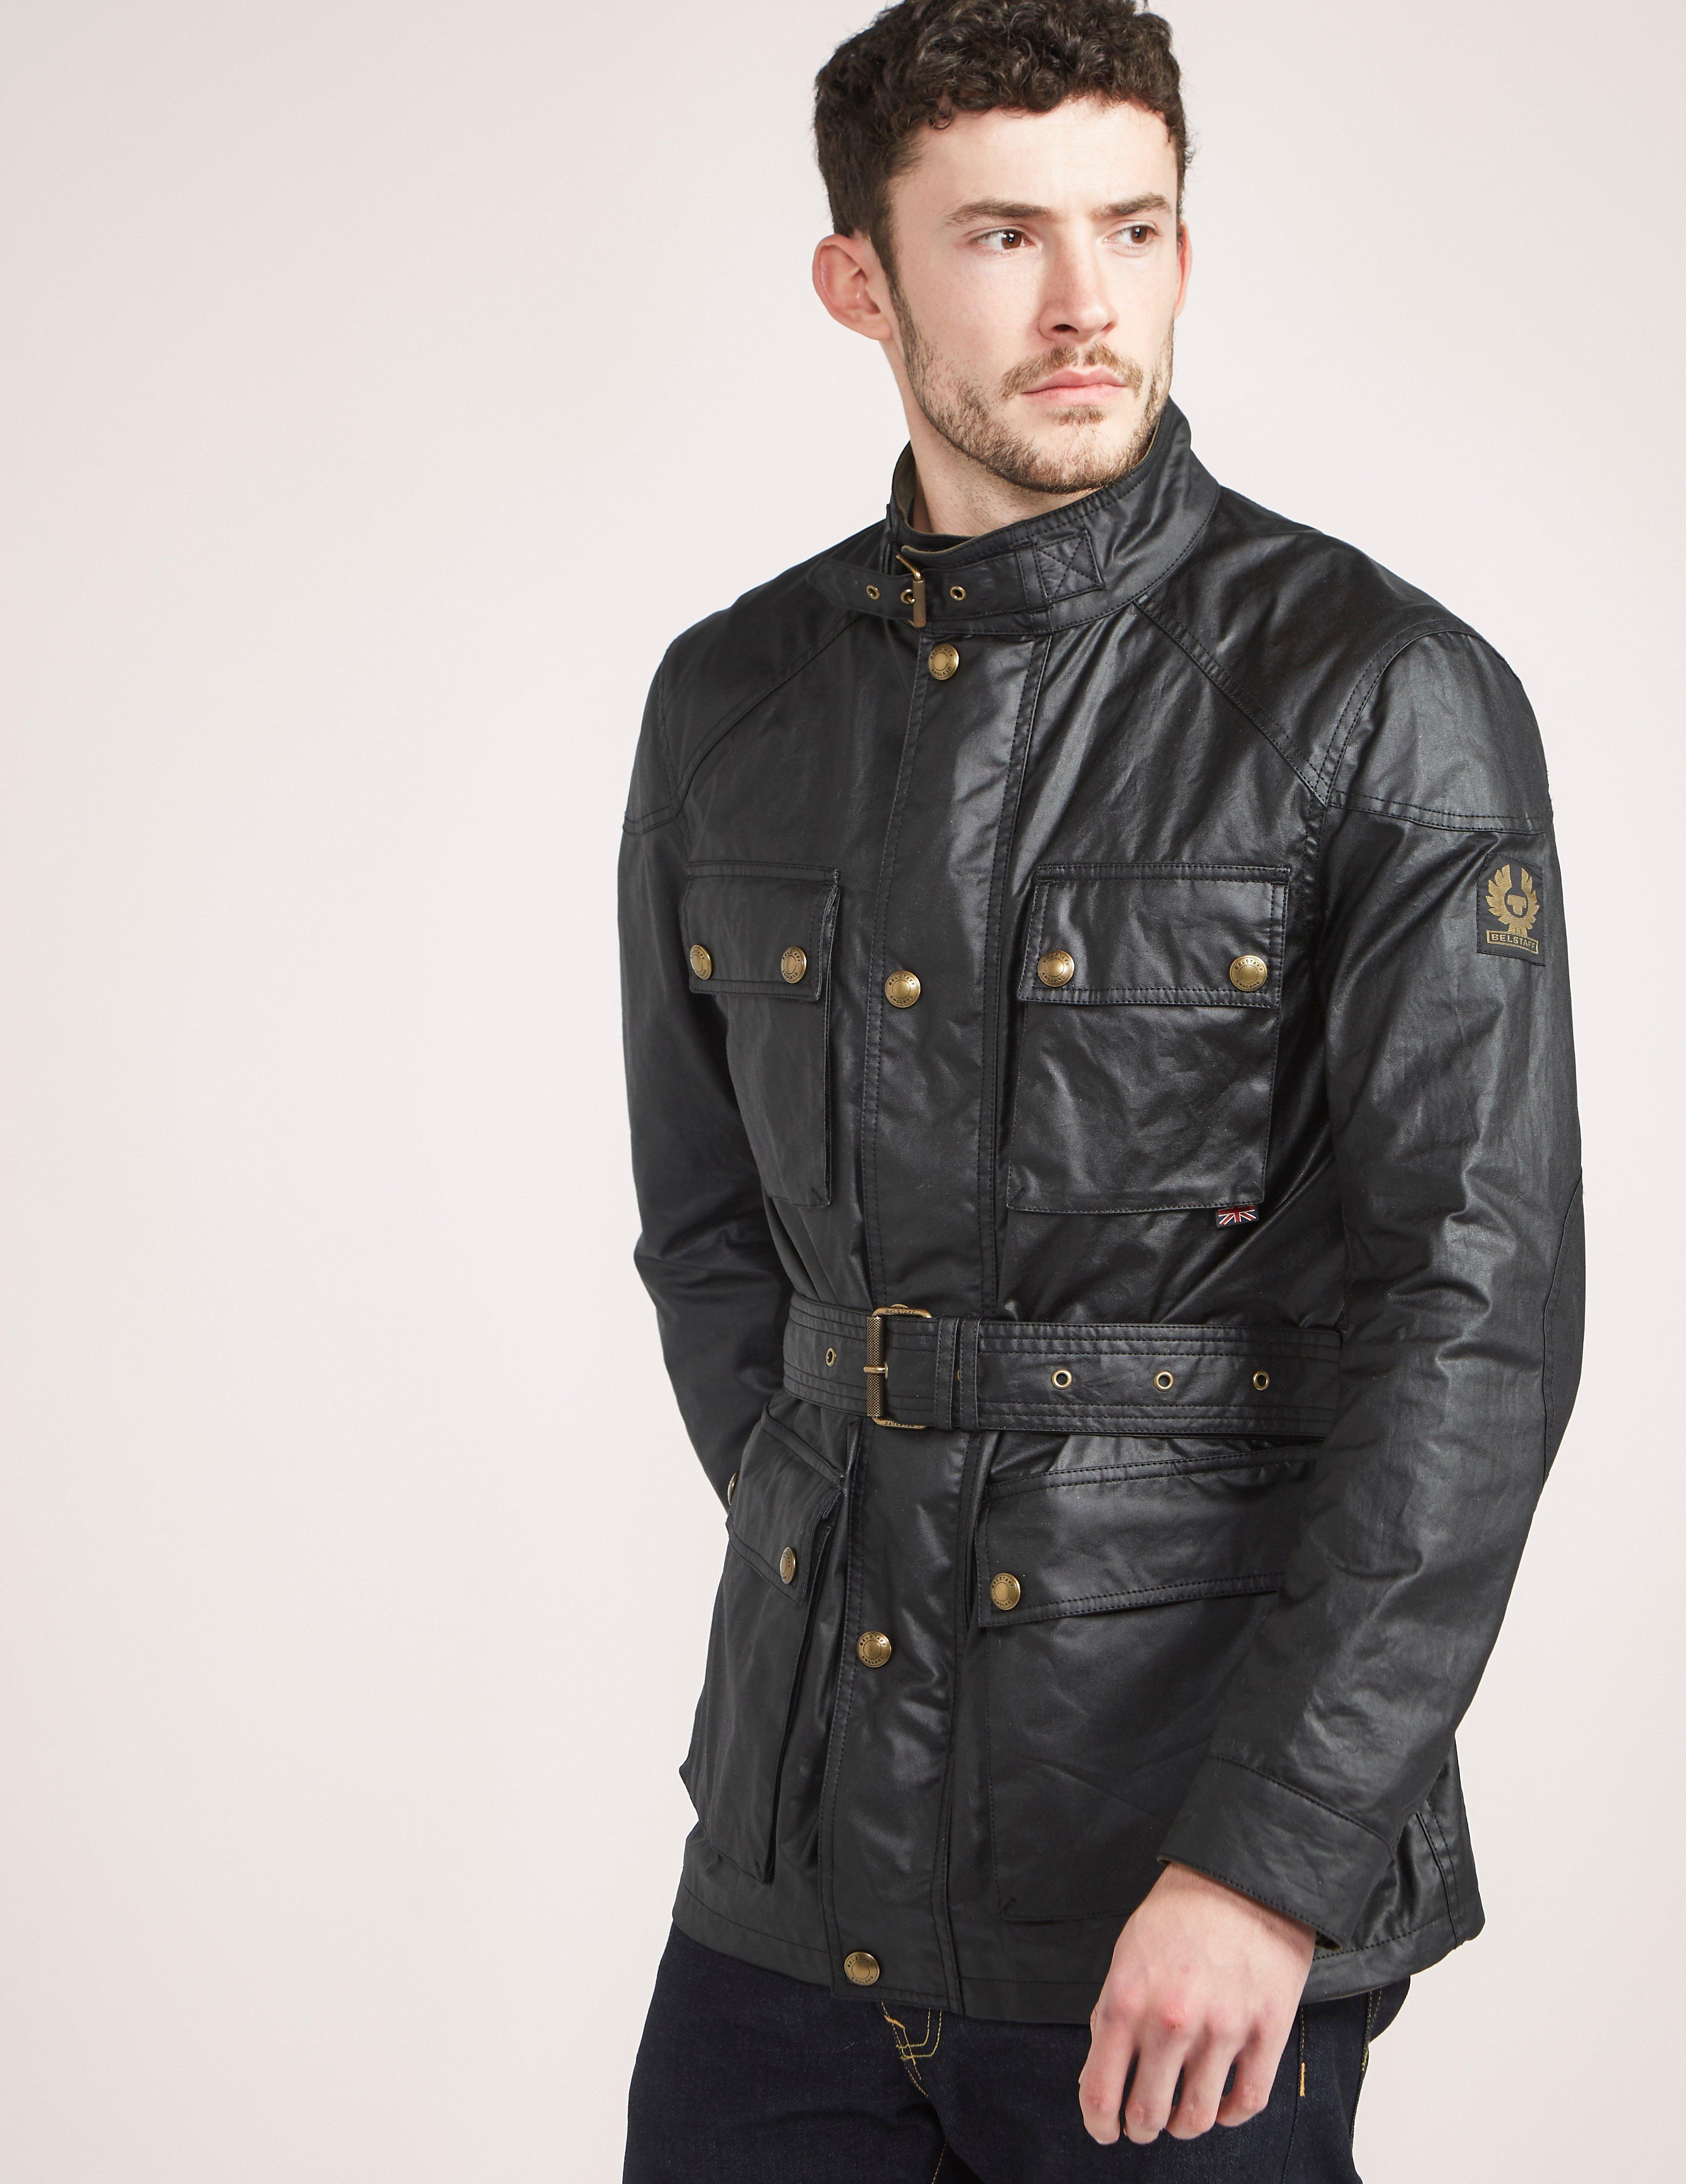 Lyst - Belstaff Roadmaster Waxed-cotton Jacket in Black for Men - Save 27%